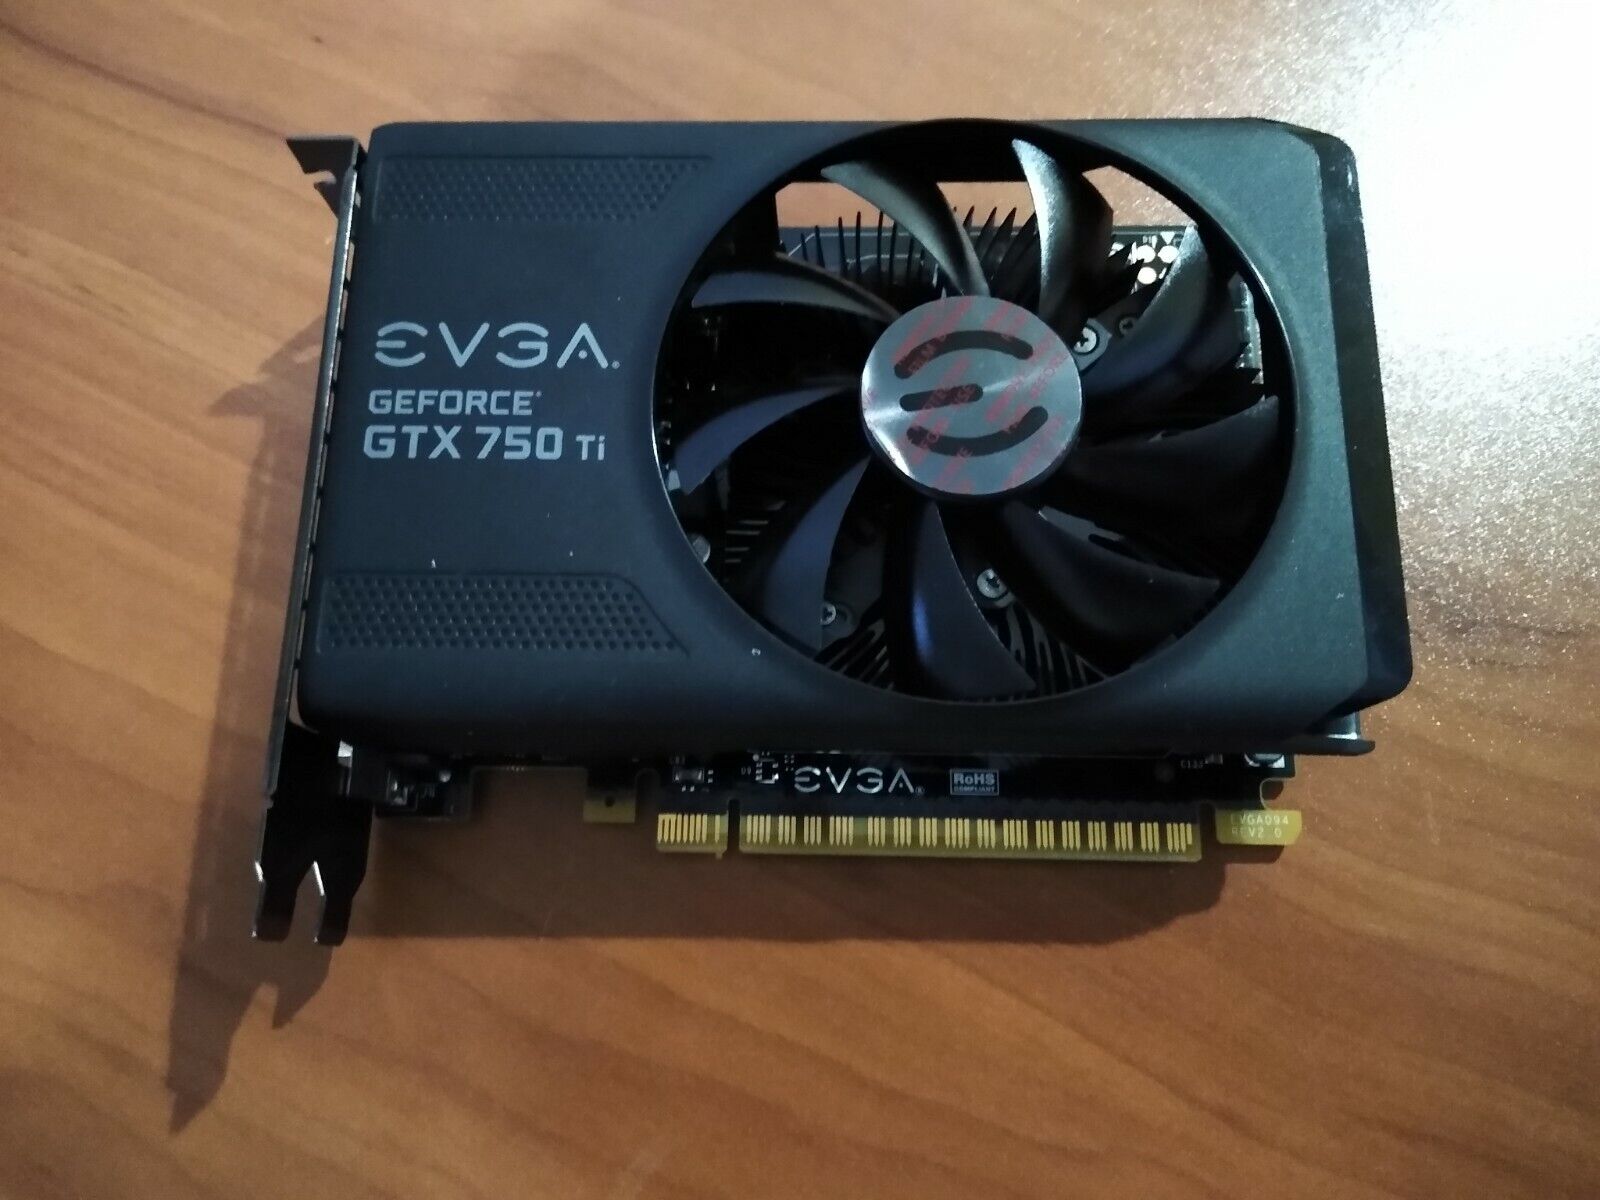 EVGA GeForce GTX 750 Ti 2GB GPU VRAM Graphics Card PC Gaming EVGA